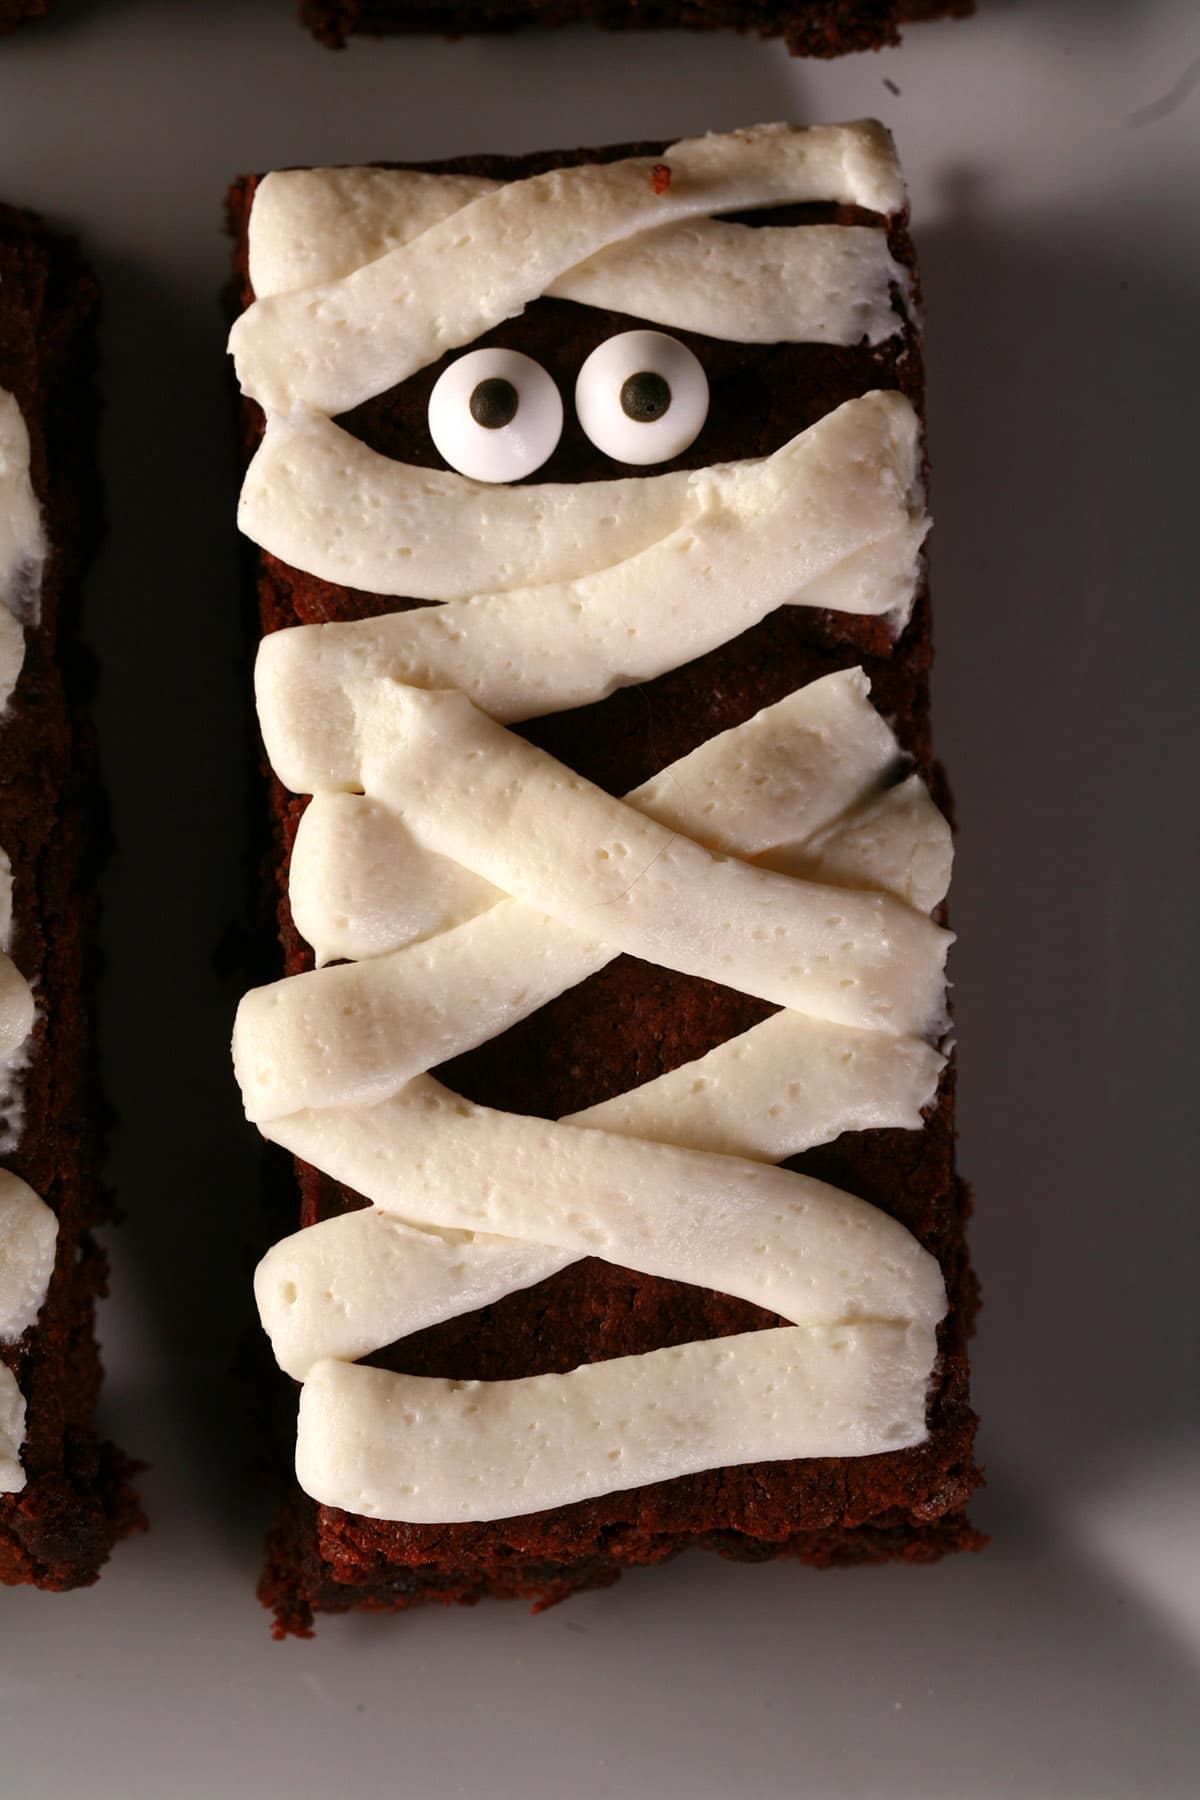 A single Halloween brownie iced to look like a mummy.